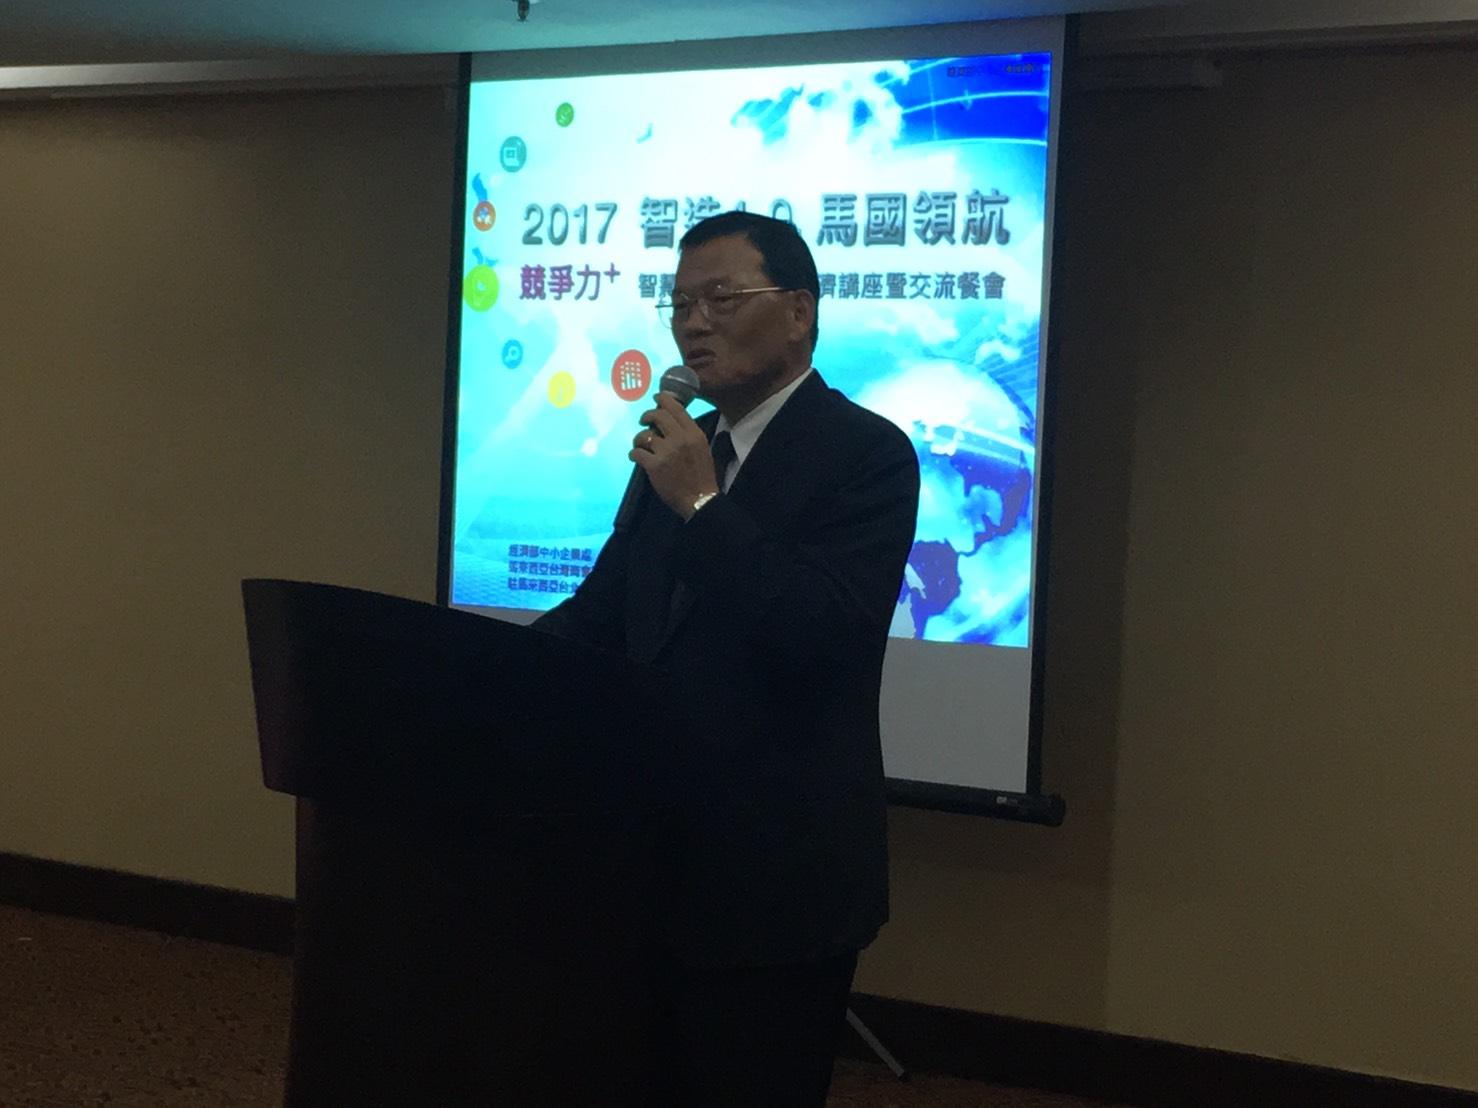 Representative Chang, James Chi-ping attended the “2017 Smart Manufacturing and Circular Economy Seminar” in Kuala Lumpur on 23 May, 2017